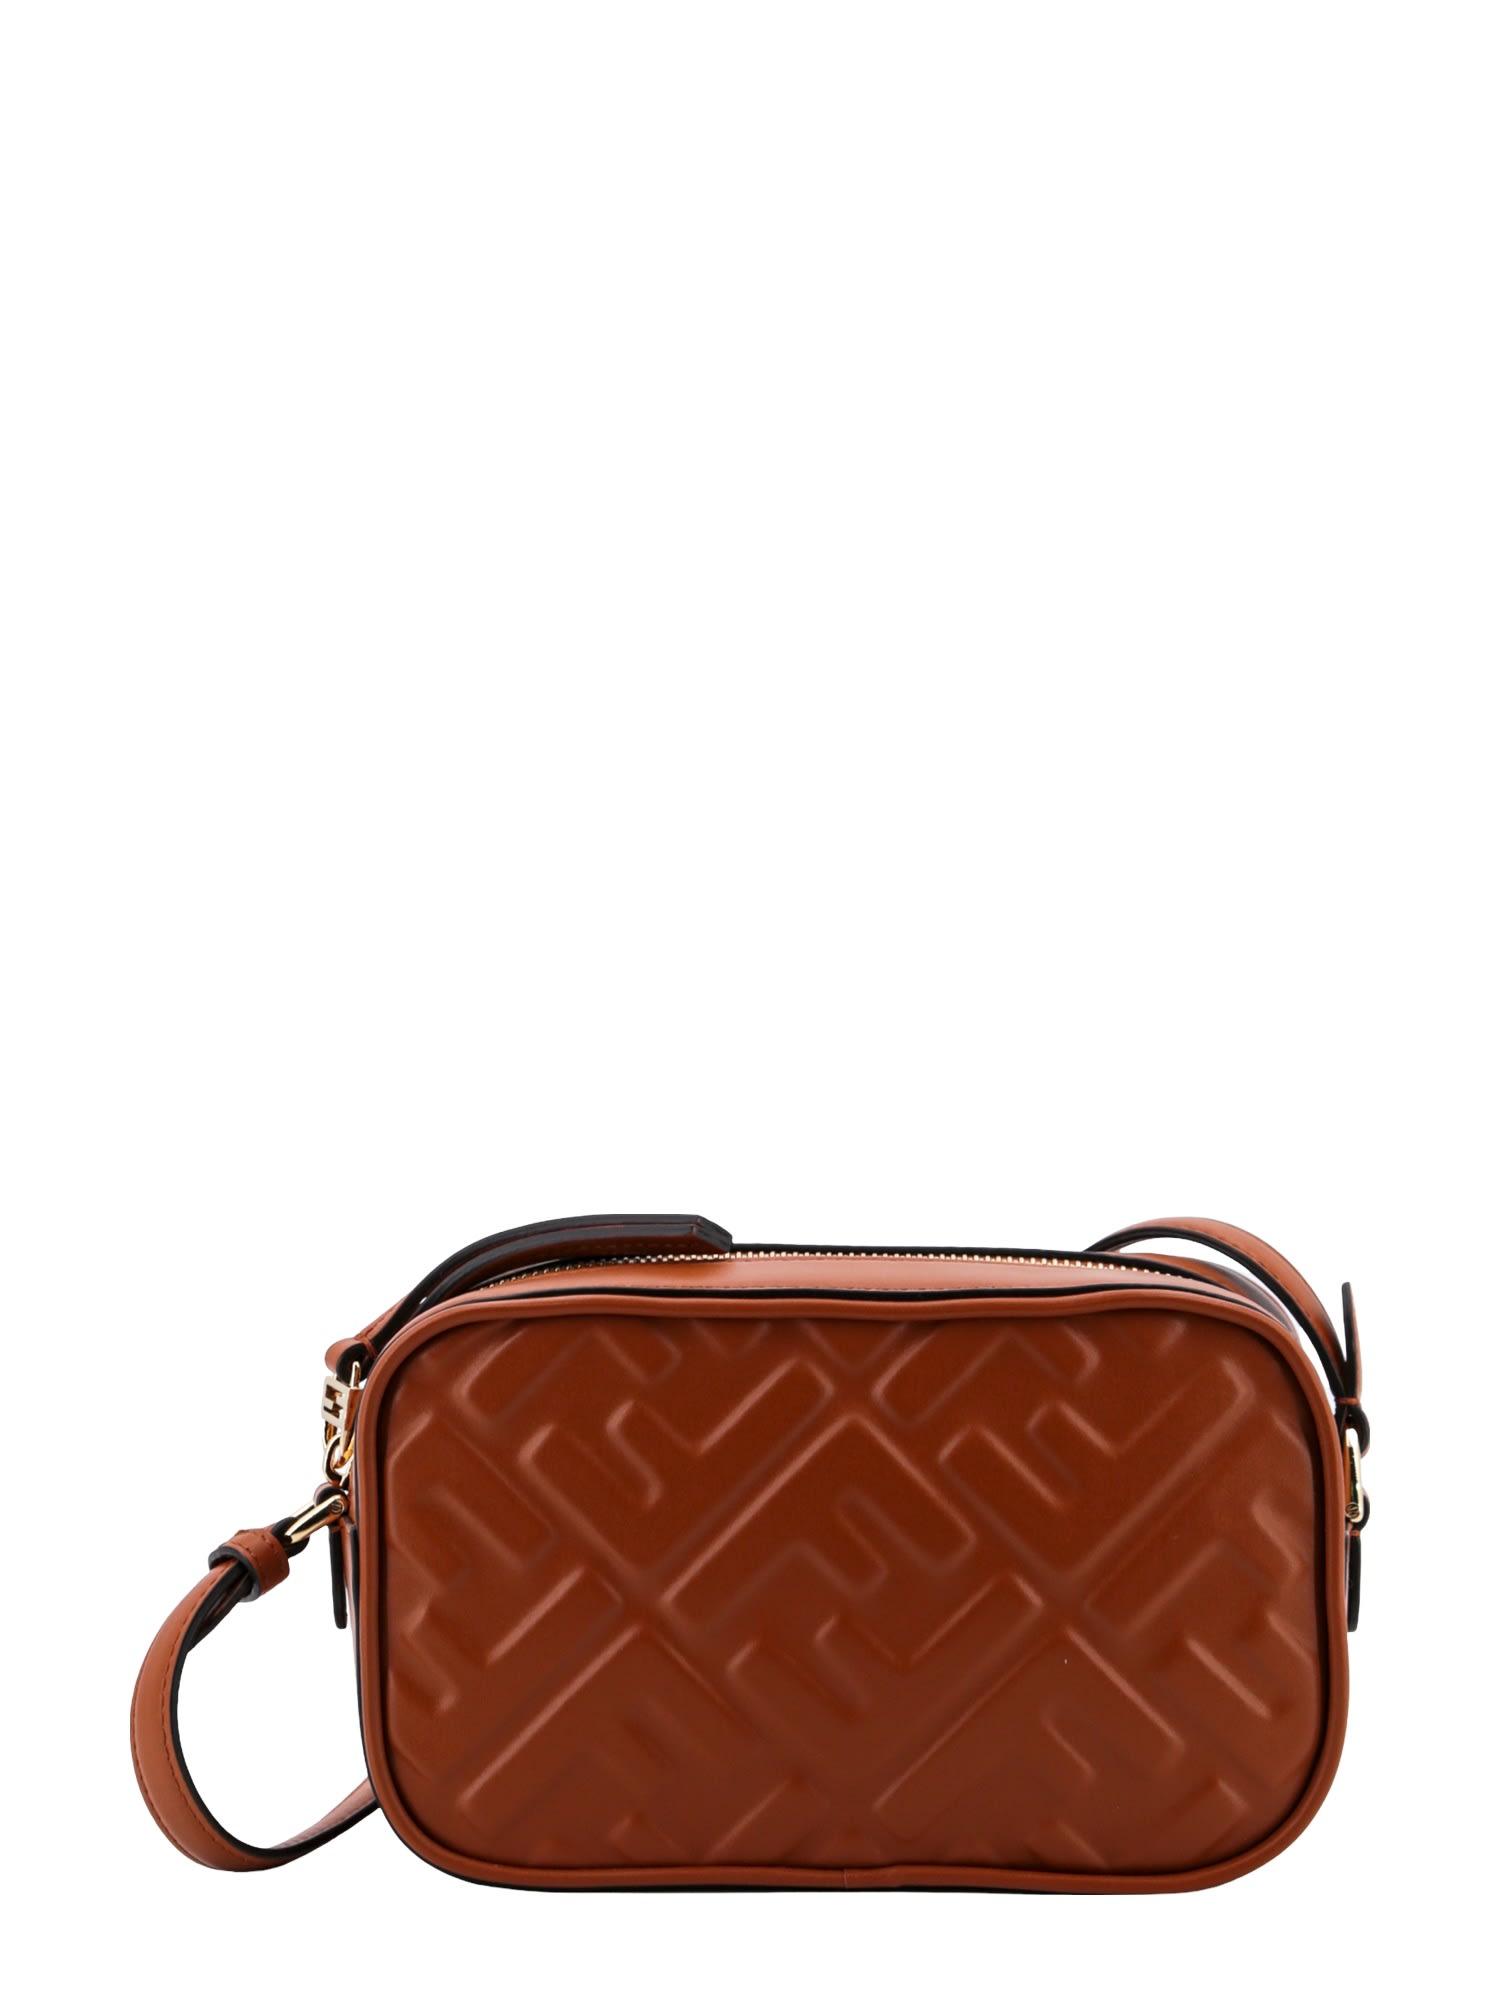 Fendi Ff Mini Leather Camera Bag in Brown